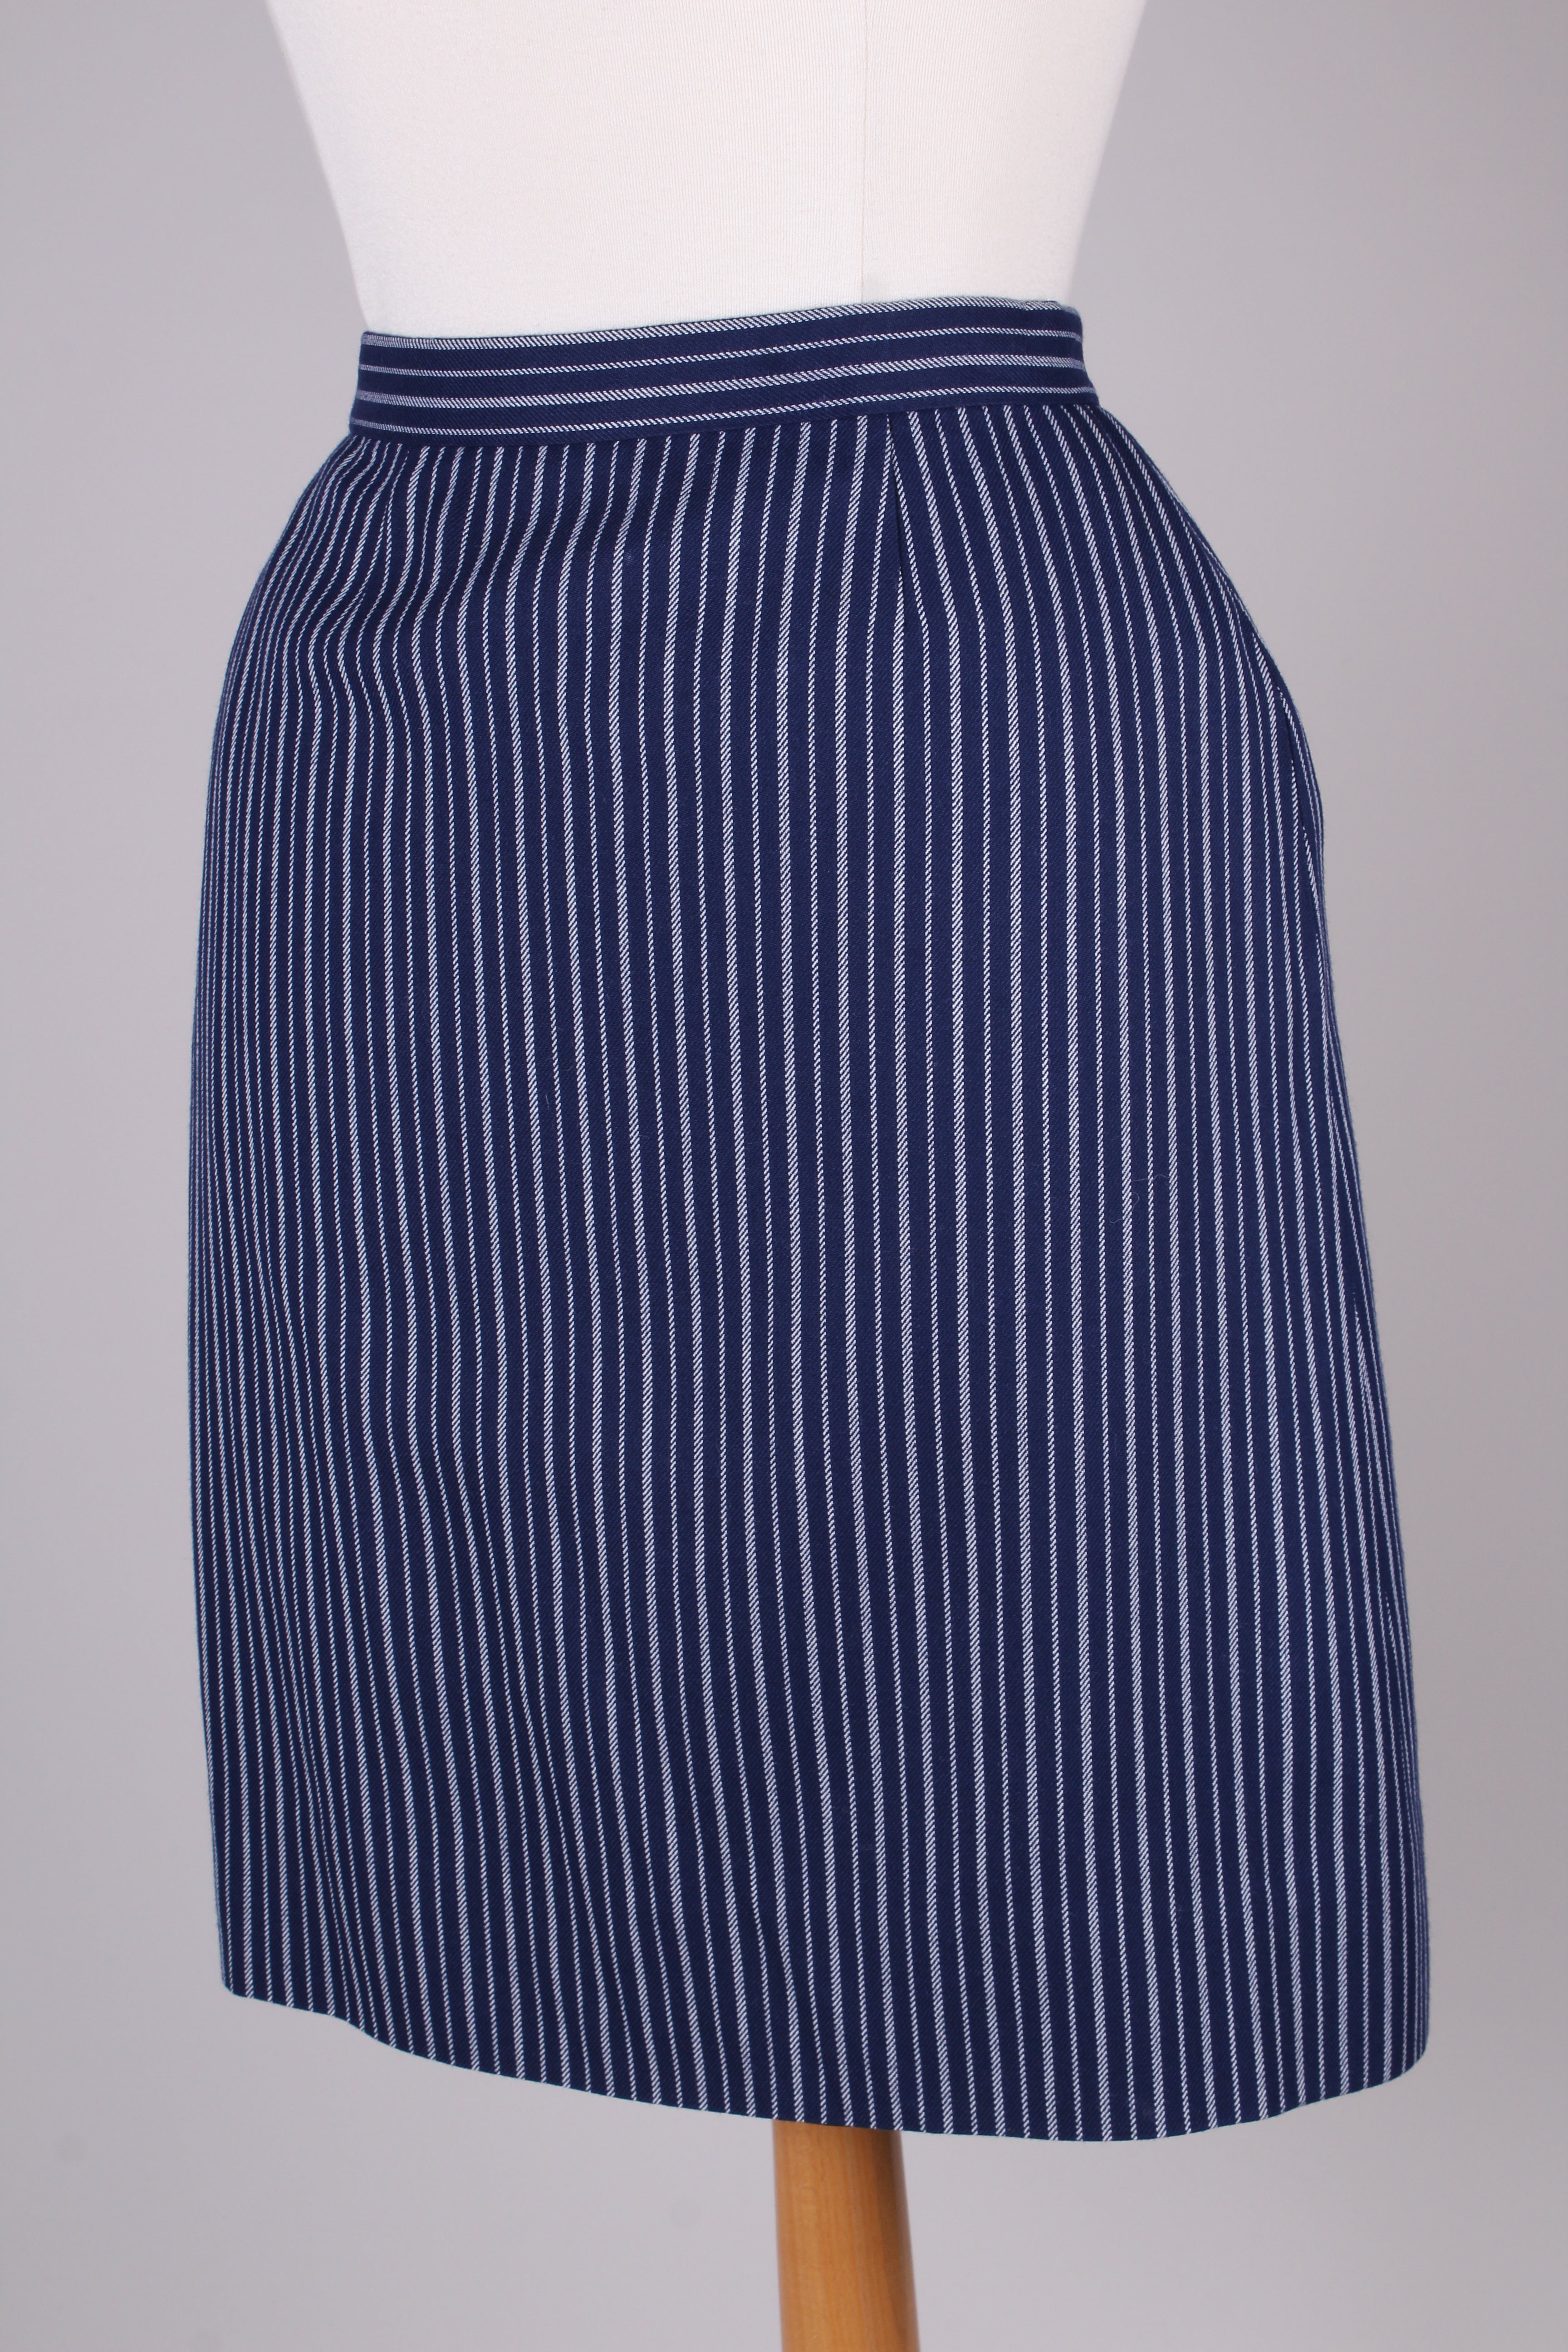 Stribet nederdel. 1960. Xs